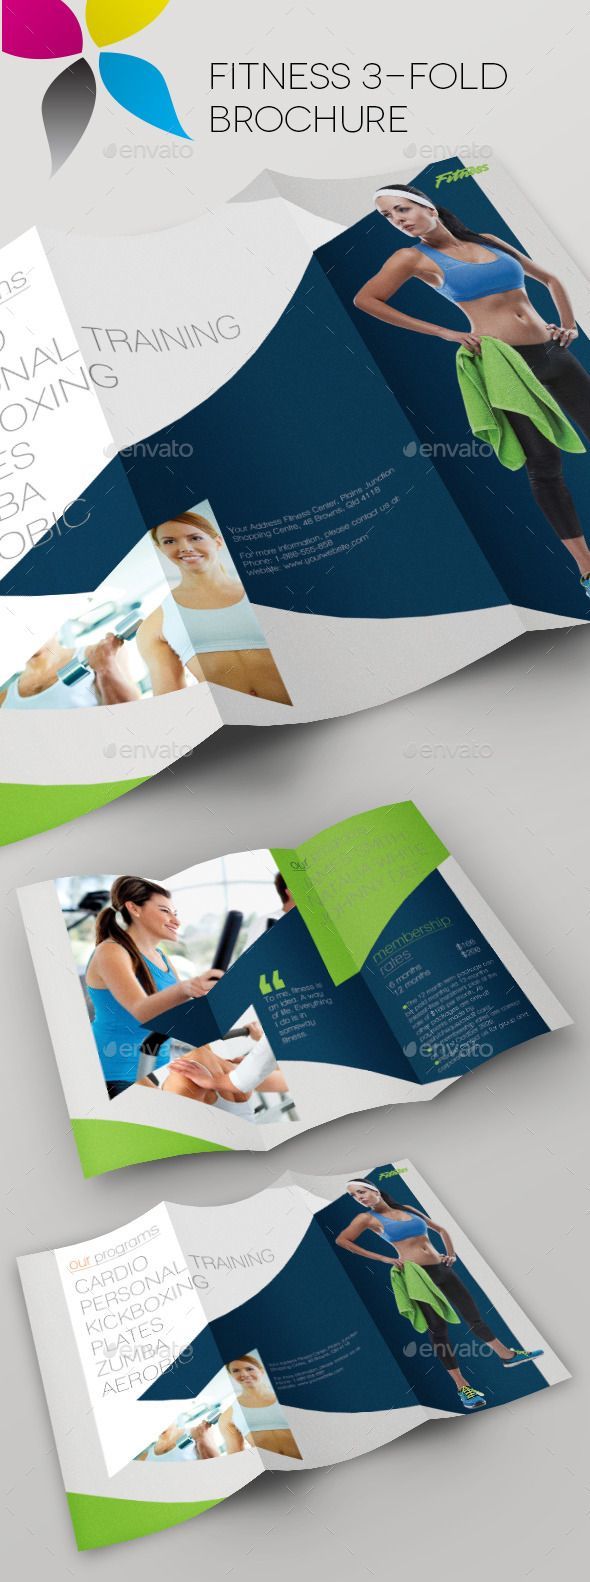 Healthcare-Advertising-Healthcare-Advertising-Fitness-3-Fold-Brochure-CS2-11x8.5-3-fold-brochure Healthcare Advertising : Healthcare Advertising : Fitness 3-Fold Brochure (CS2, 11x8.5, 3 fold brochure, ...